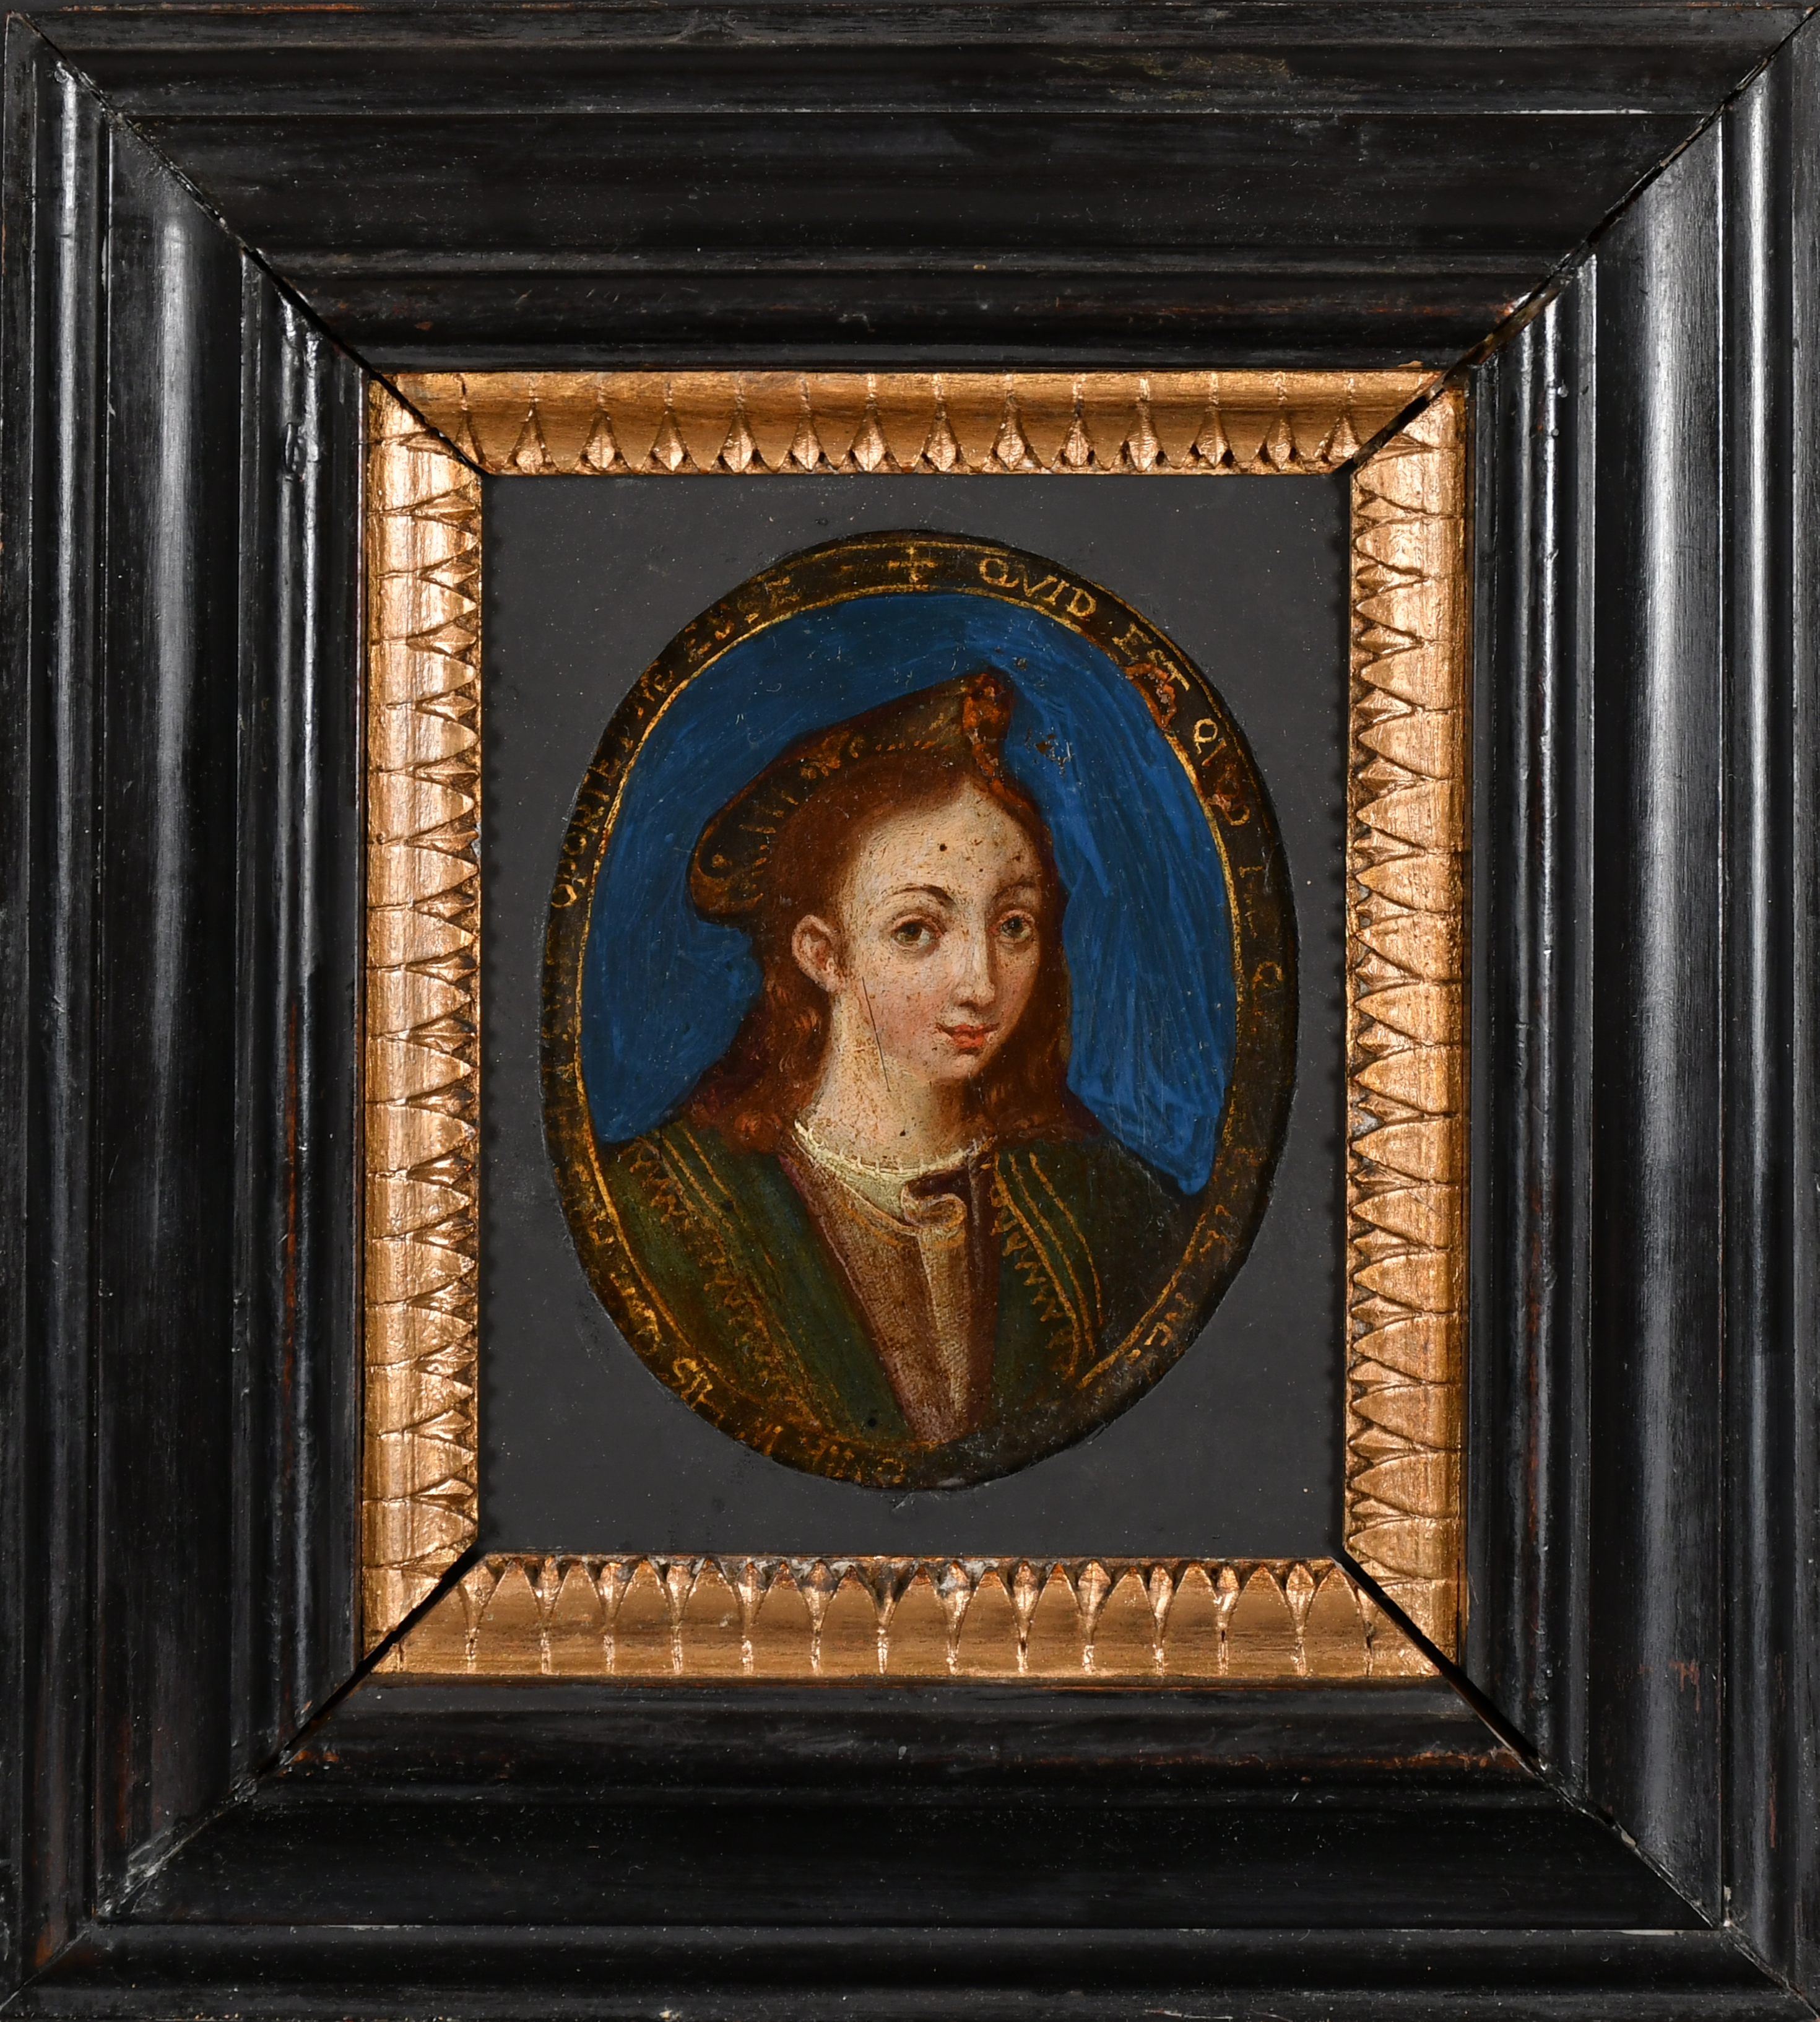 17th Century Italian School. Bust Portrait of a Lady, Oil on Copper, Oval, 4" x 3.1" (10.1 x 8cm) an